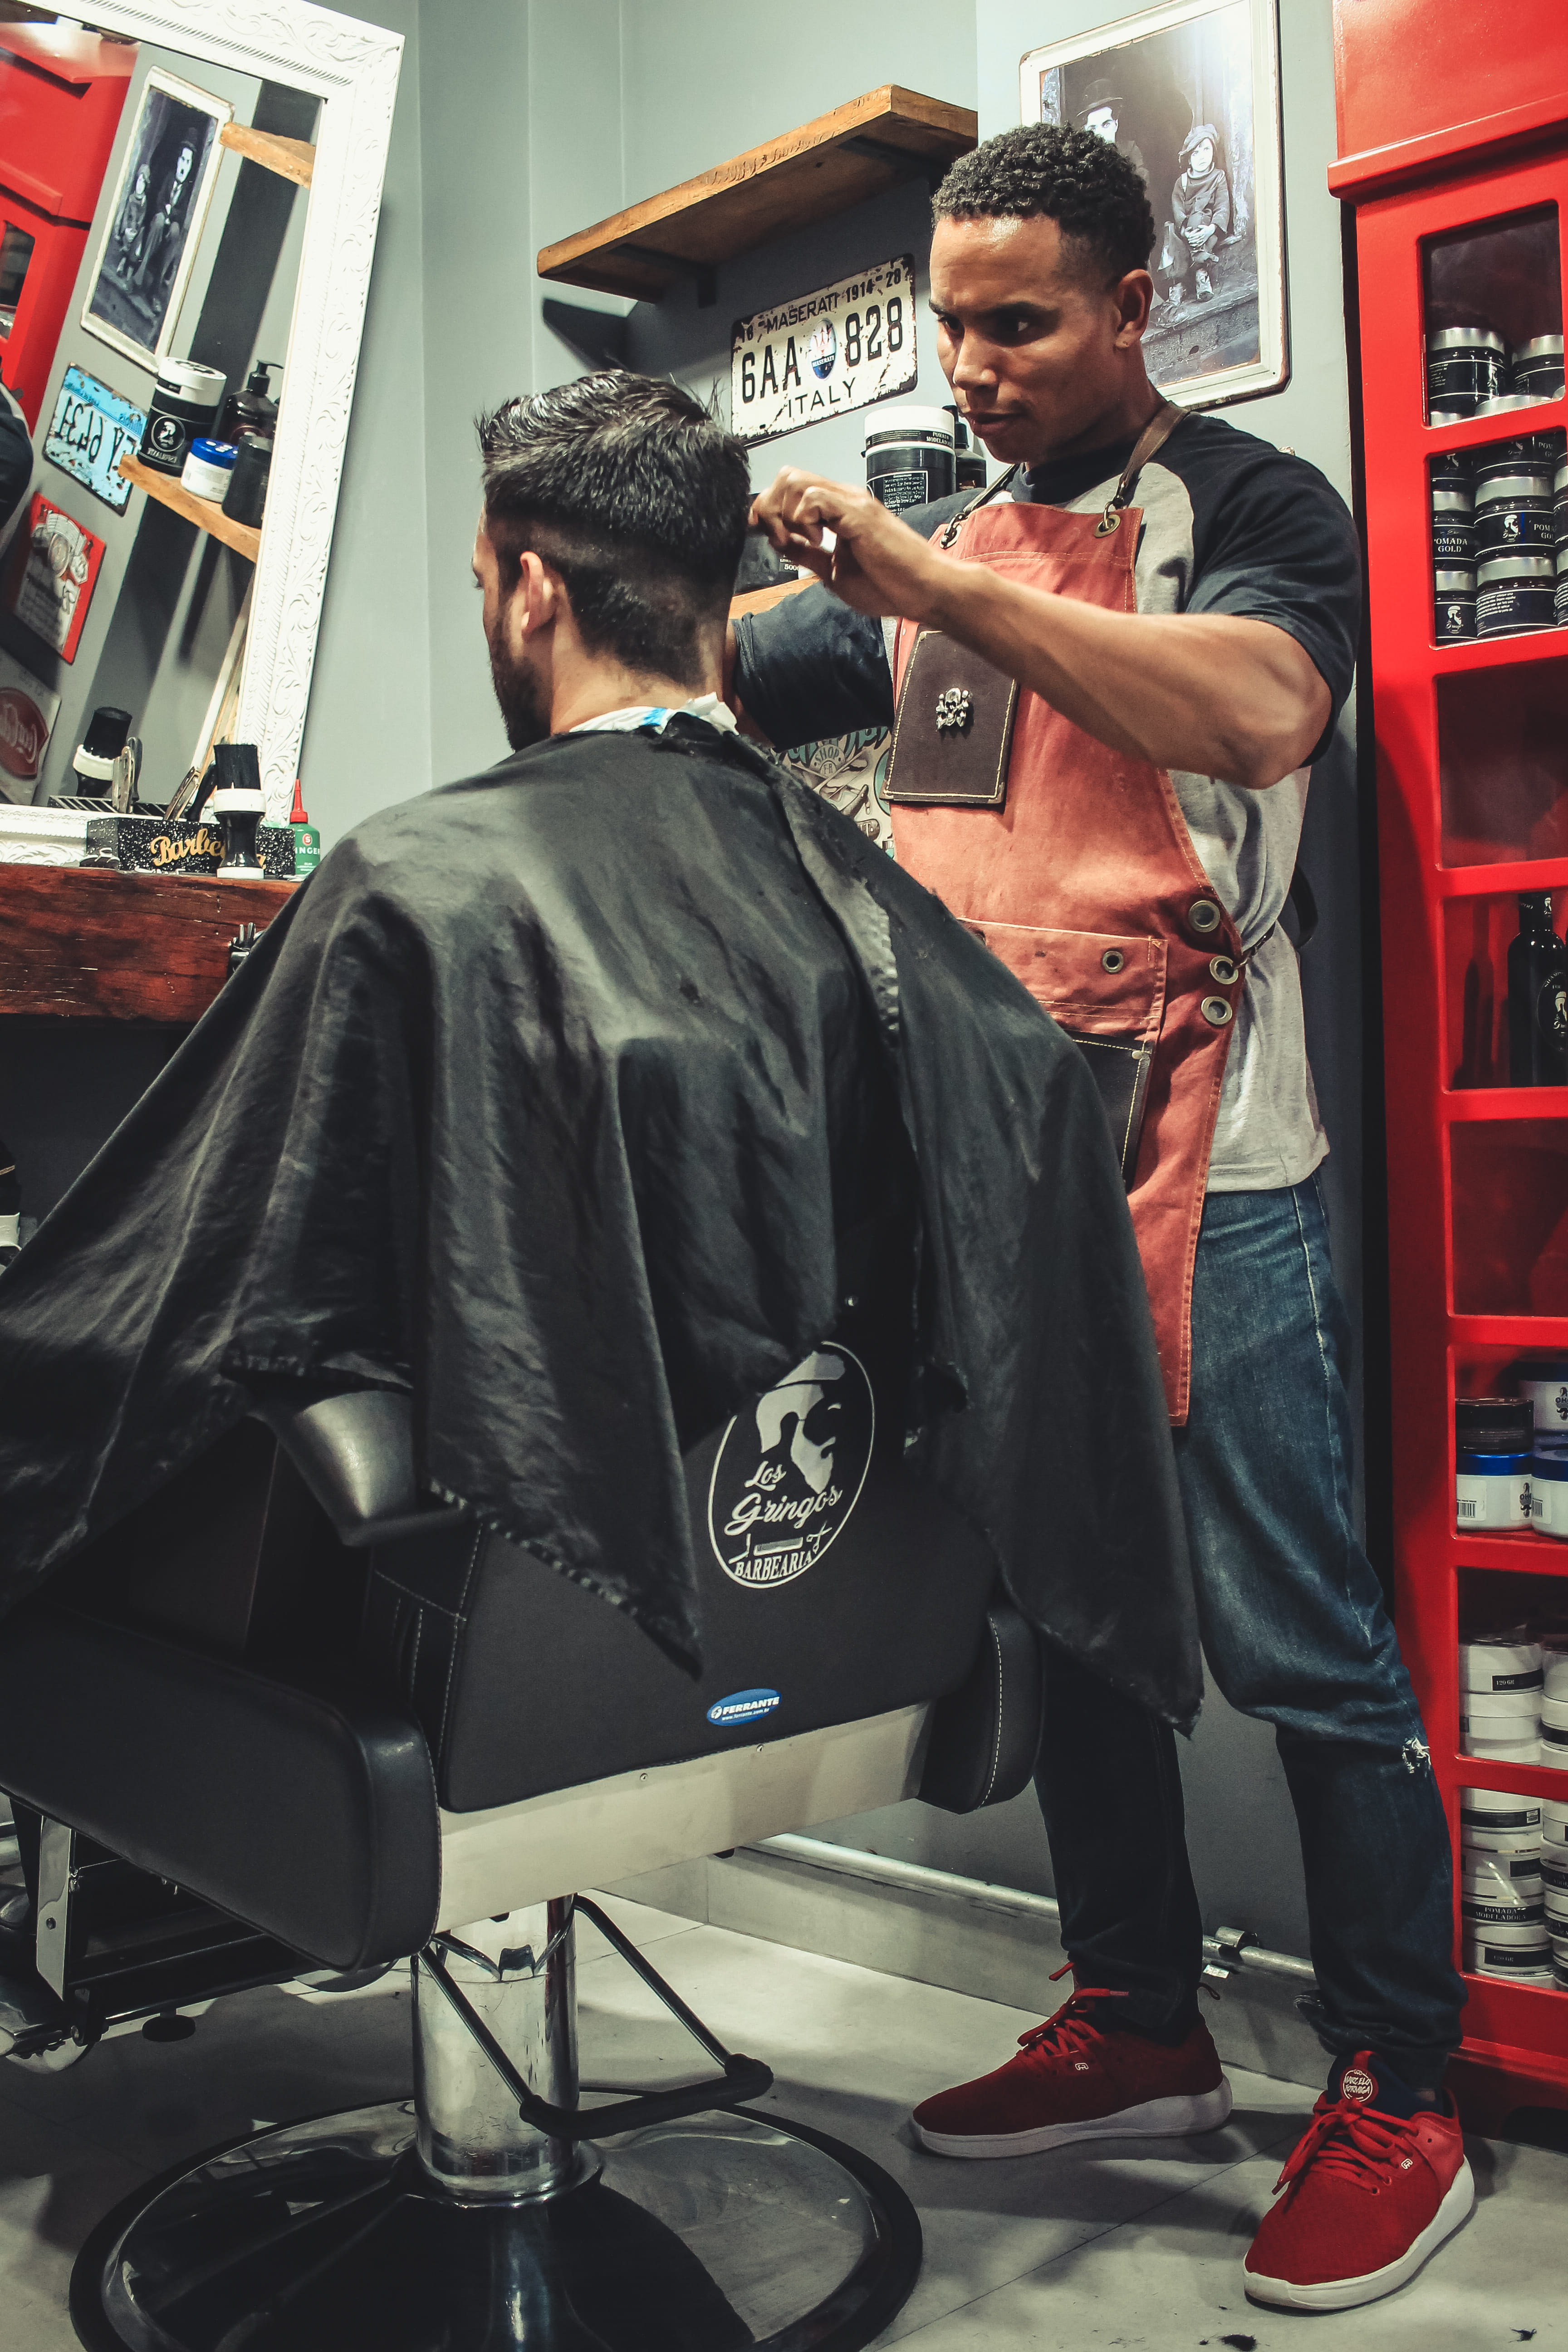 Man Cutting Hair Man While Sitting on Barber's Chair, barbershop